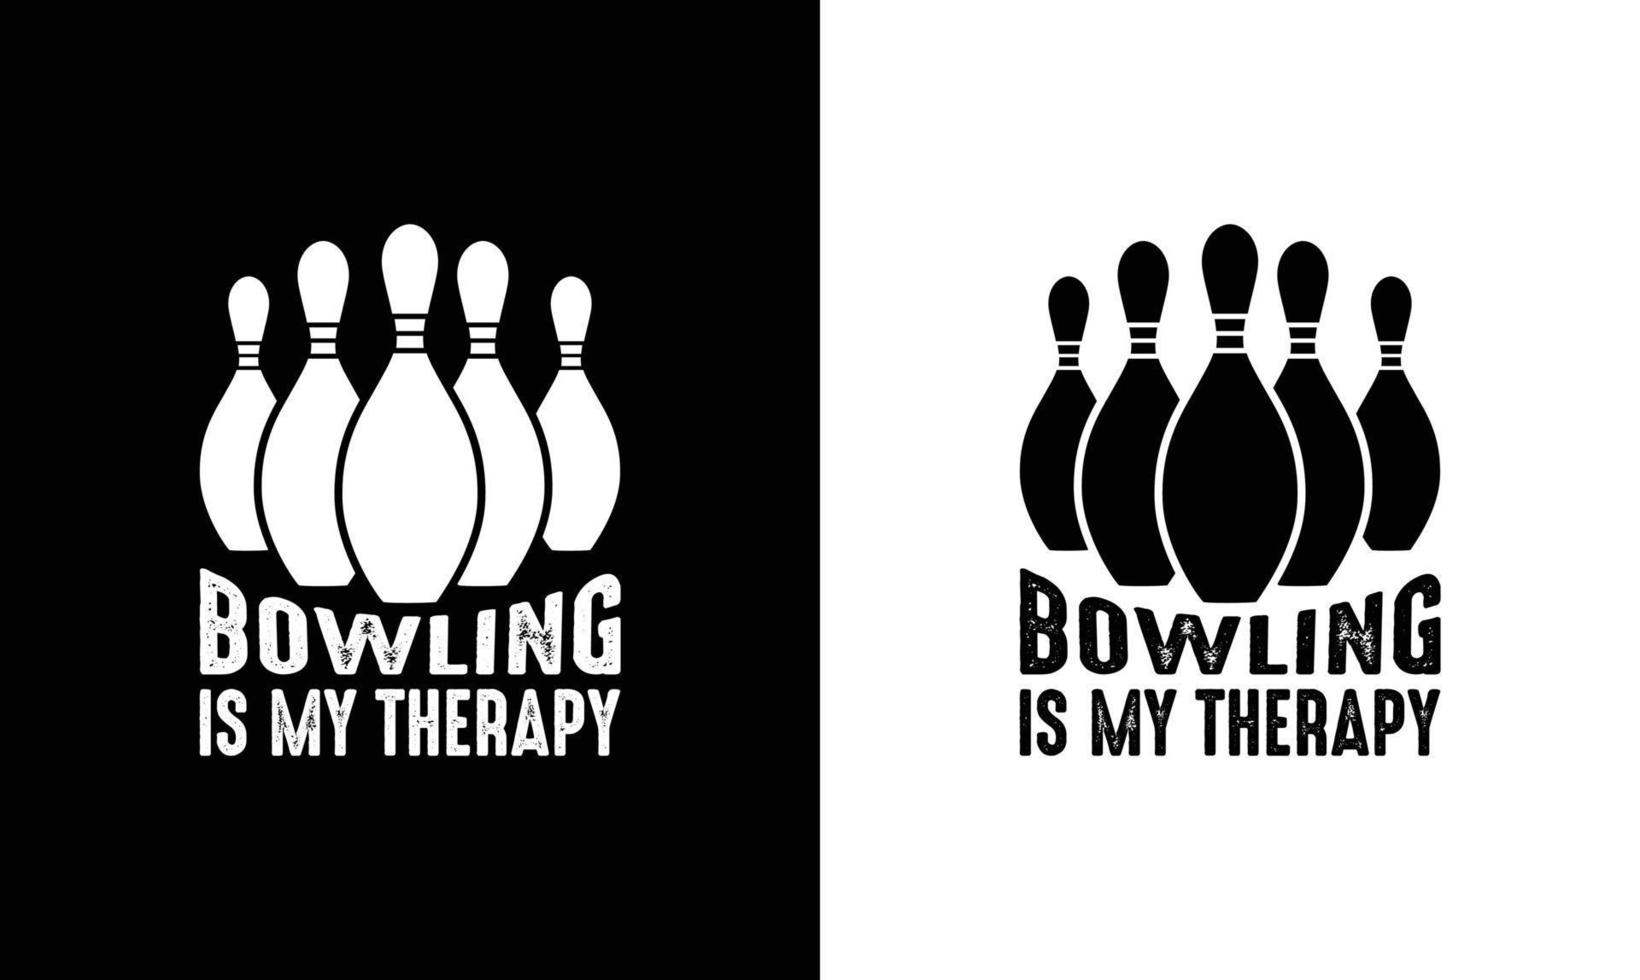 Bowling-Zitat-T-Shirt-Design, Typografie vektor